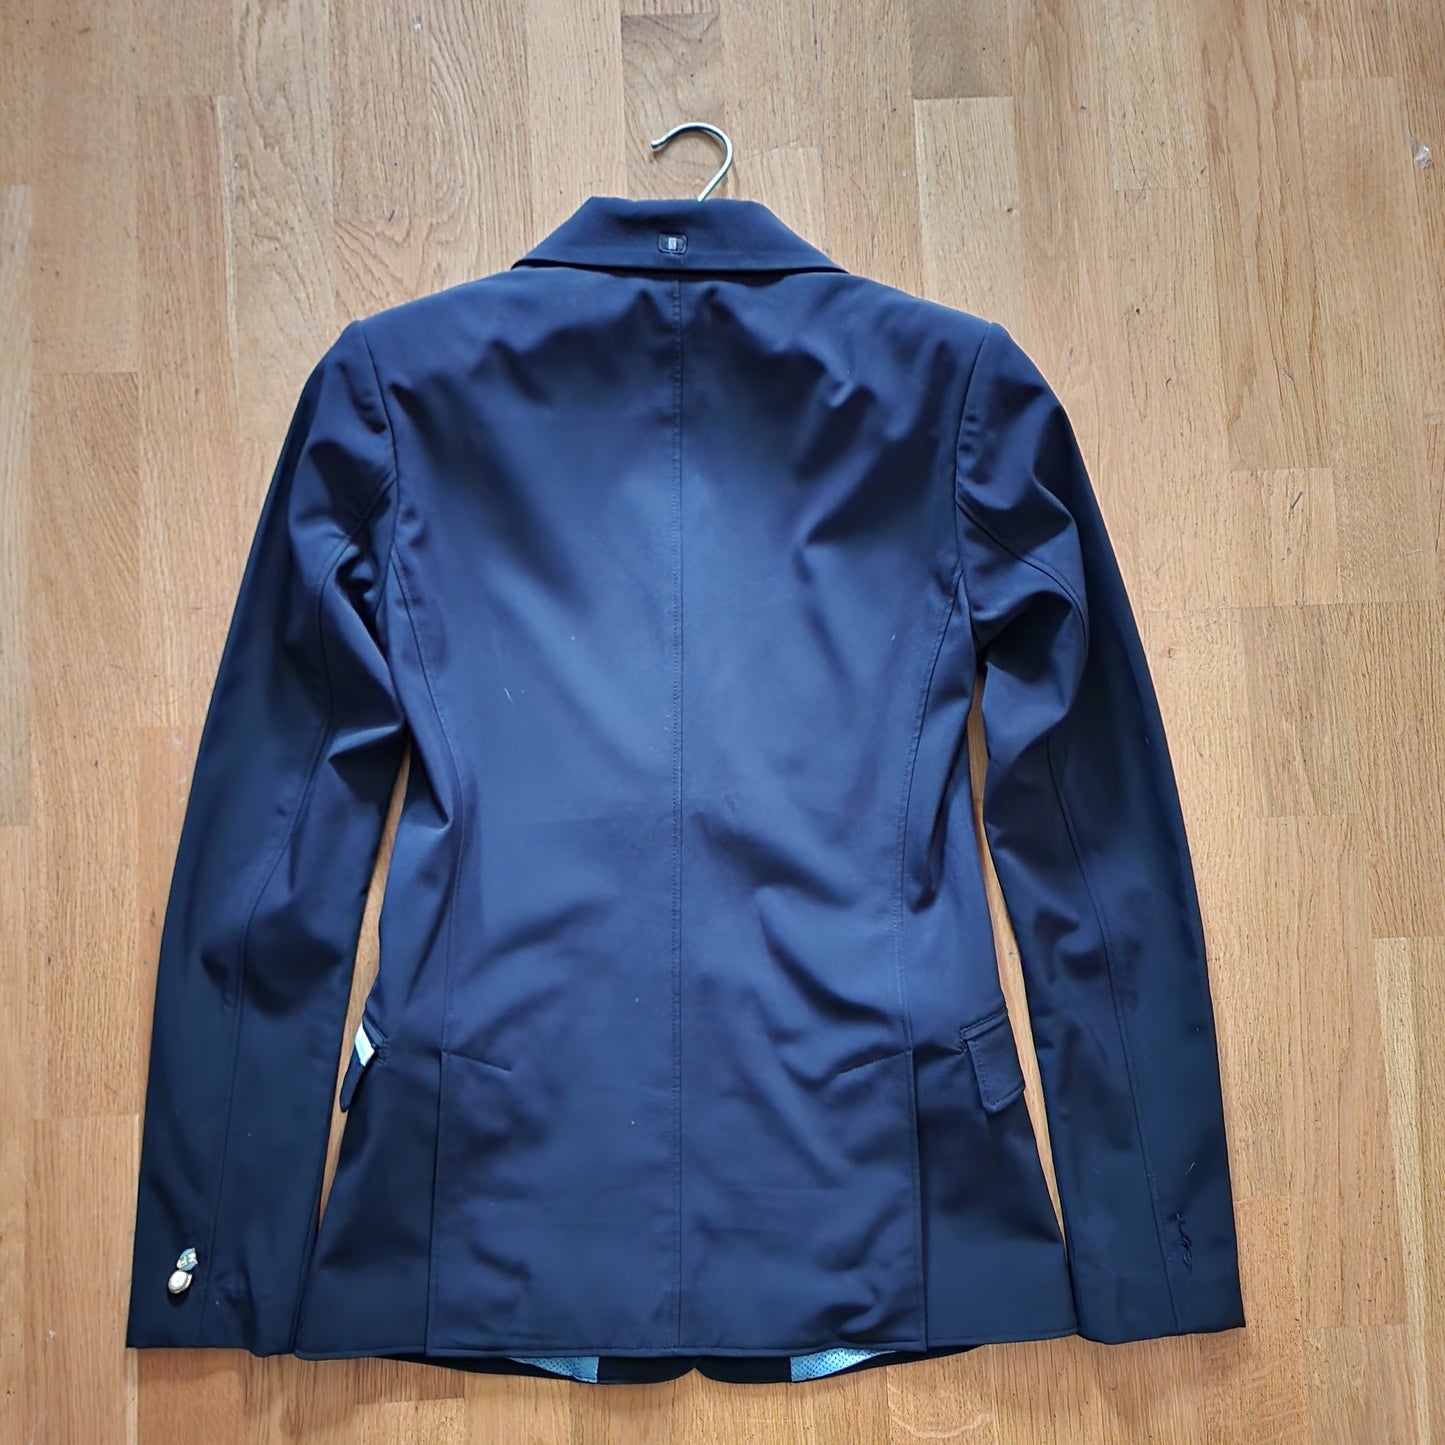 Kingsland navy show jacket, ladies 8